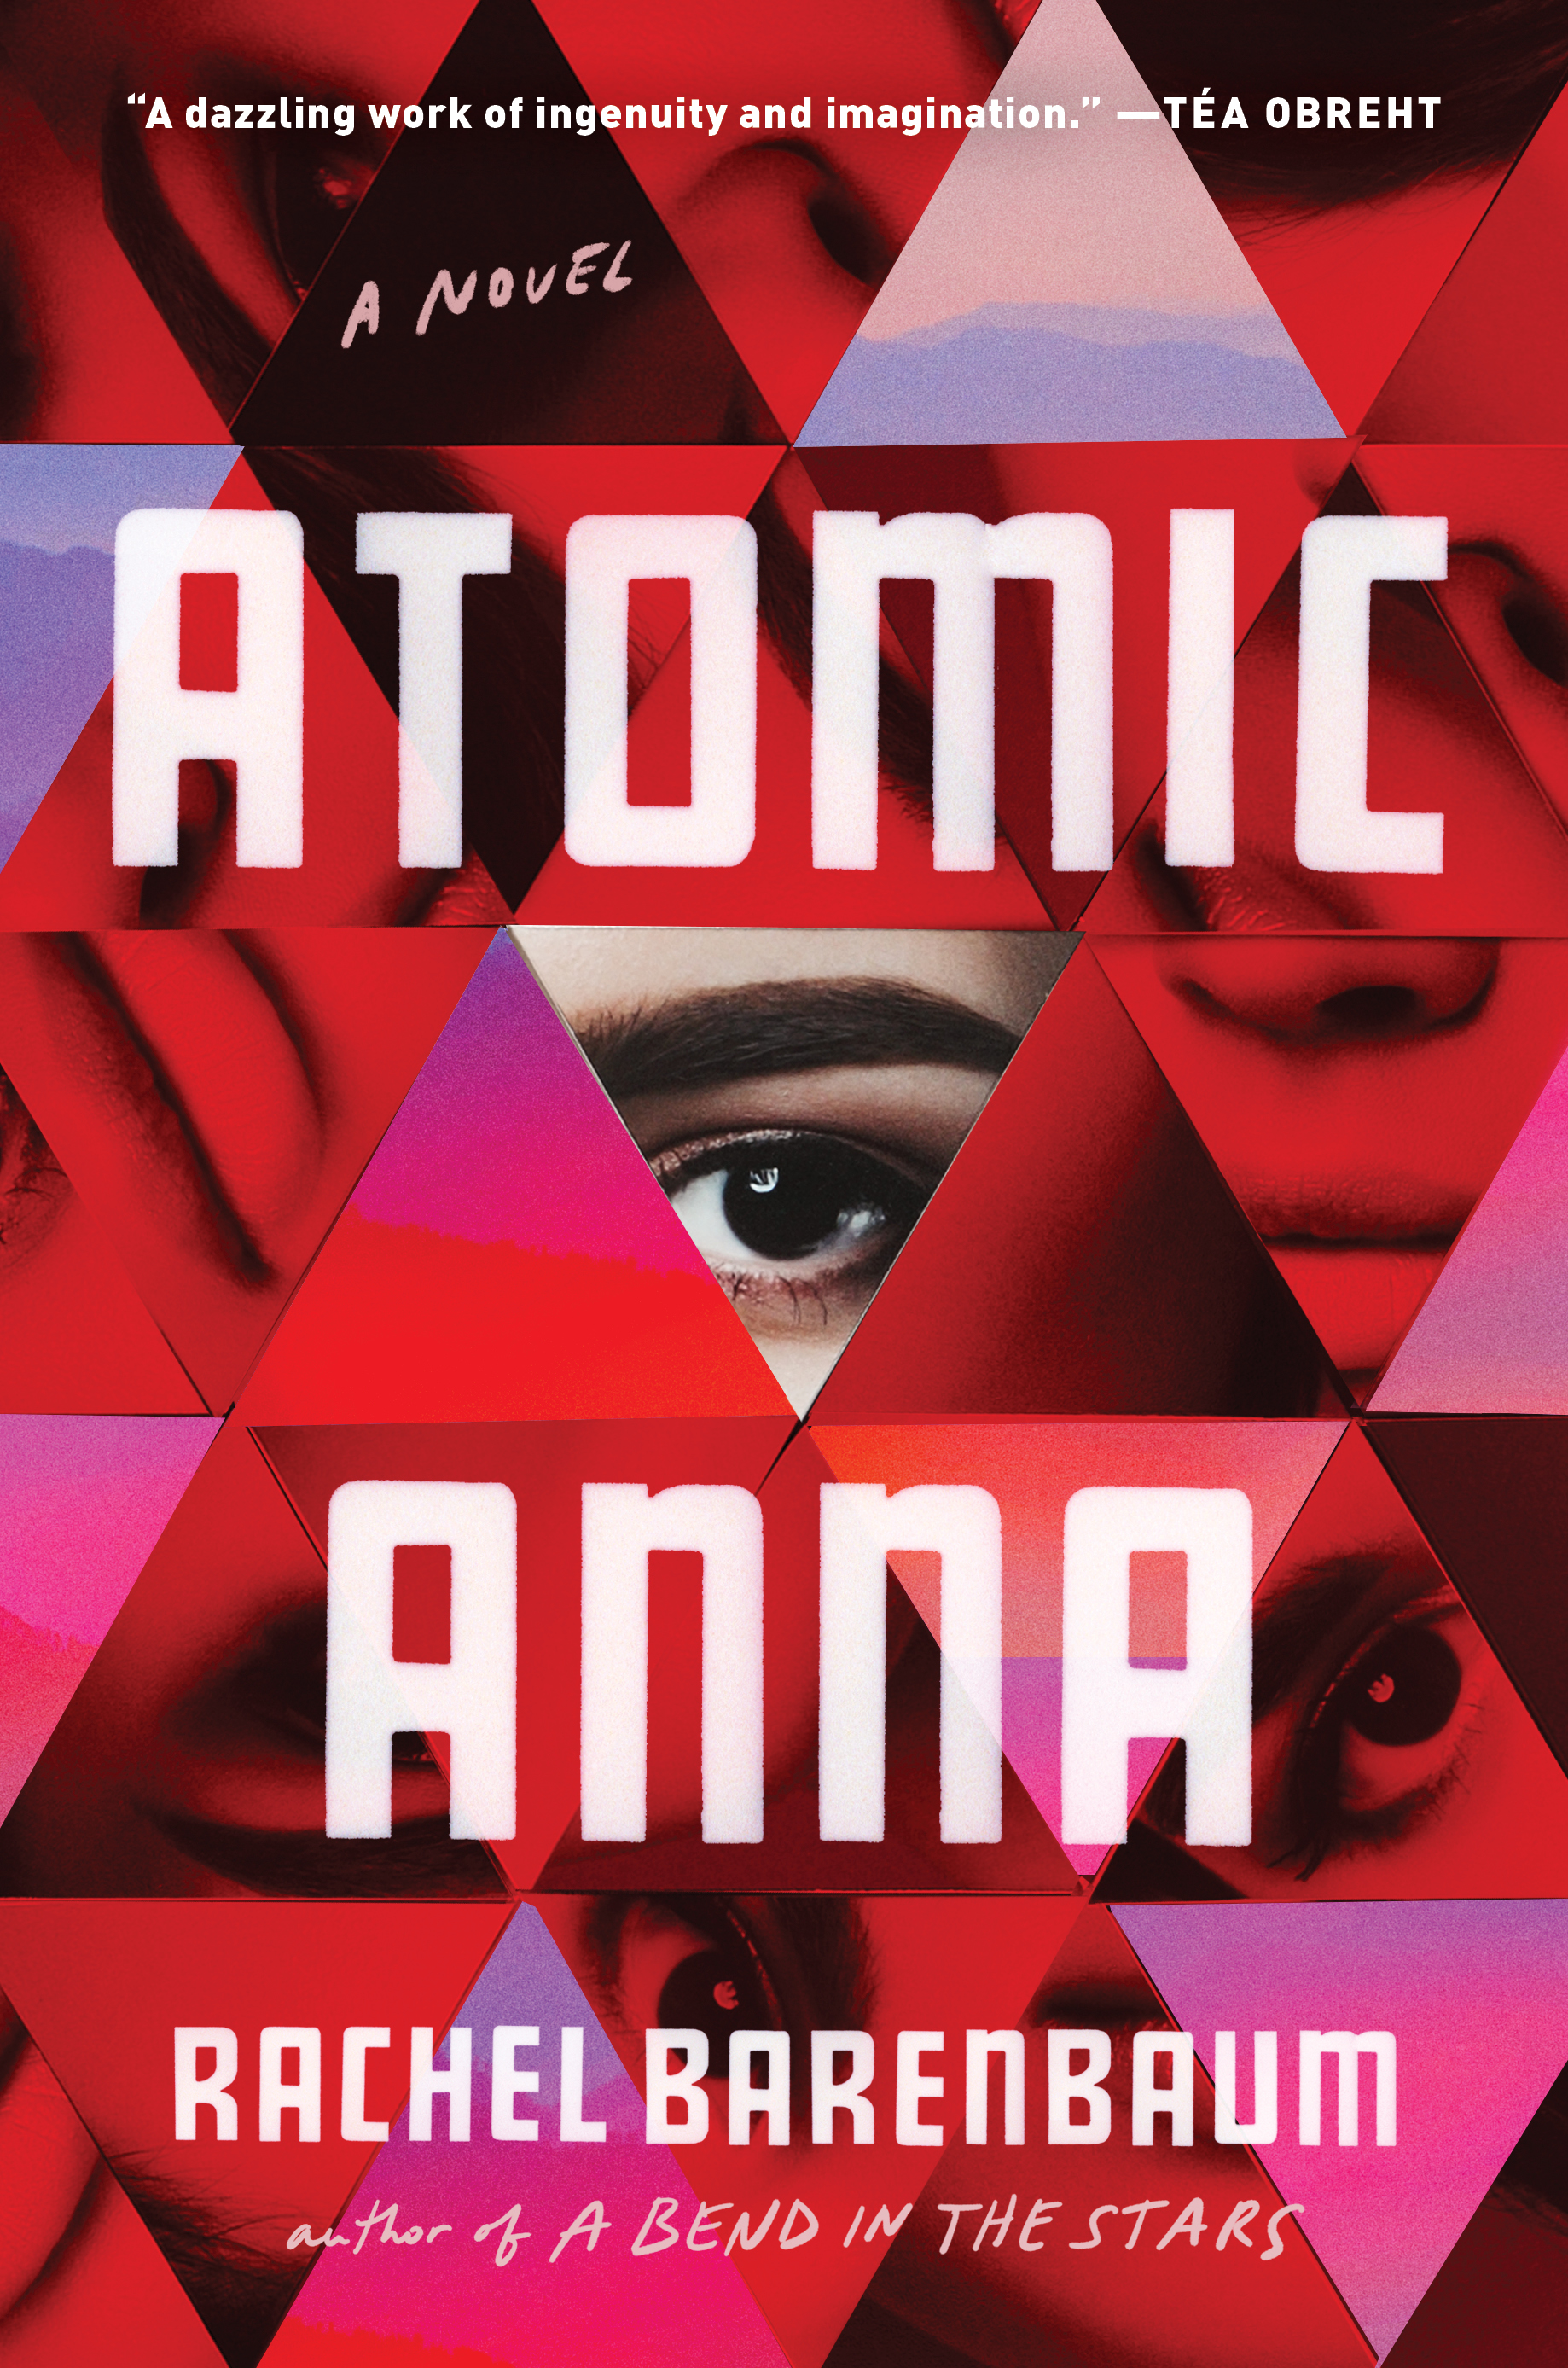 Atomic Anna by Rachel Barenbaum